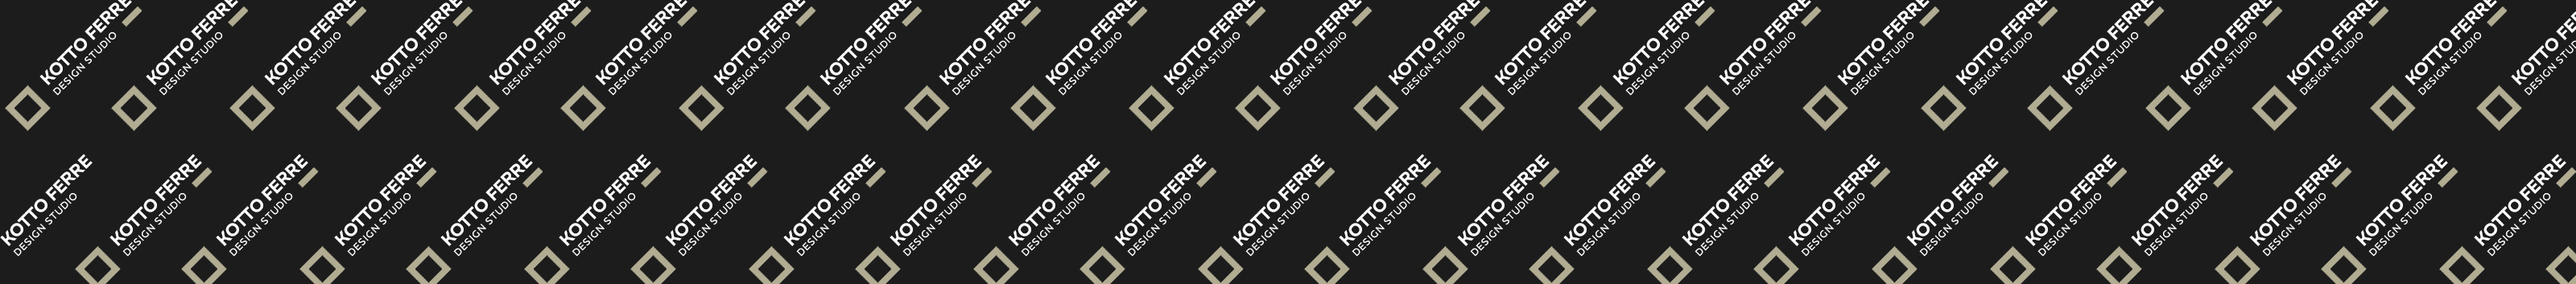 Kotto Ferre のプロファイルバナー